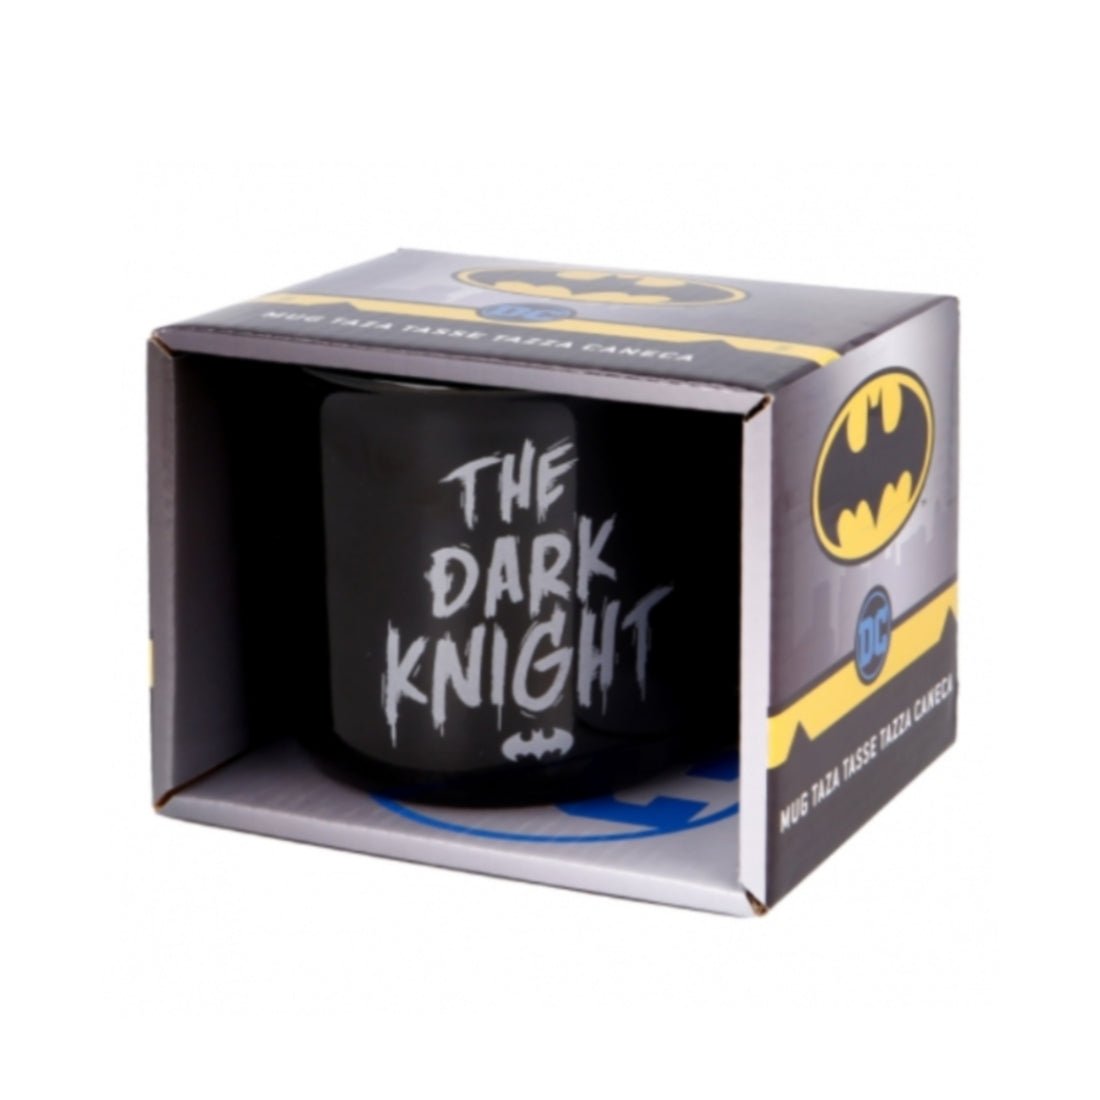 Batman The Dark Knight Ceramic Breakfast Mug - كأس - Store 974 | ستور ٩٧٤